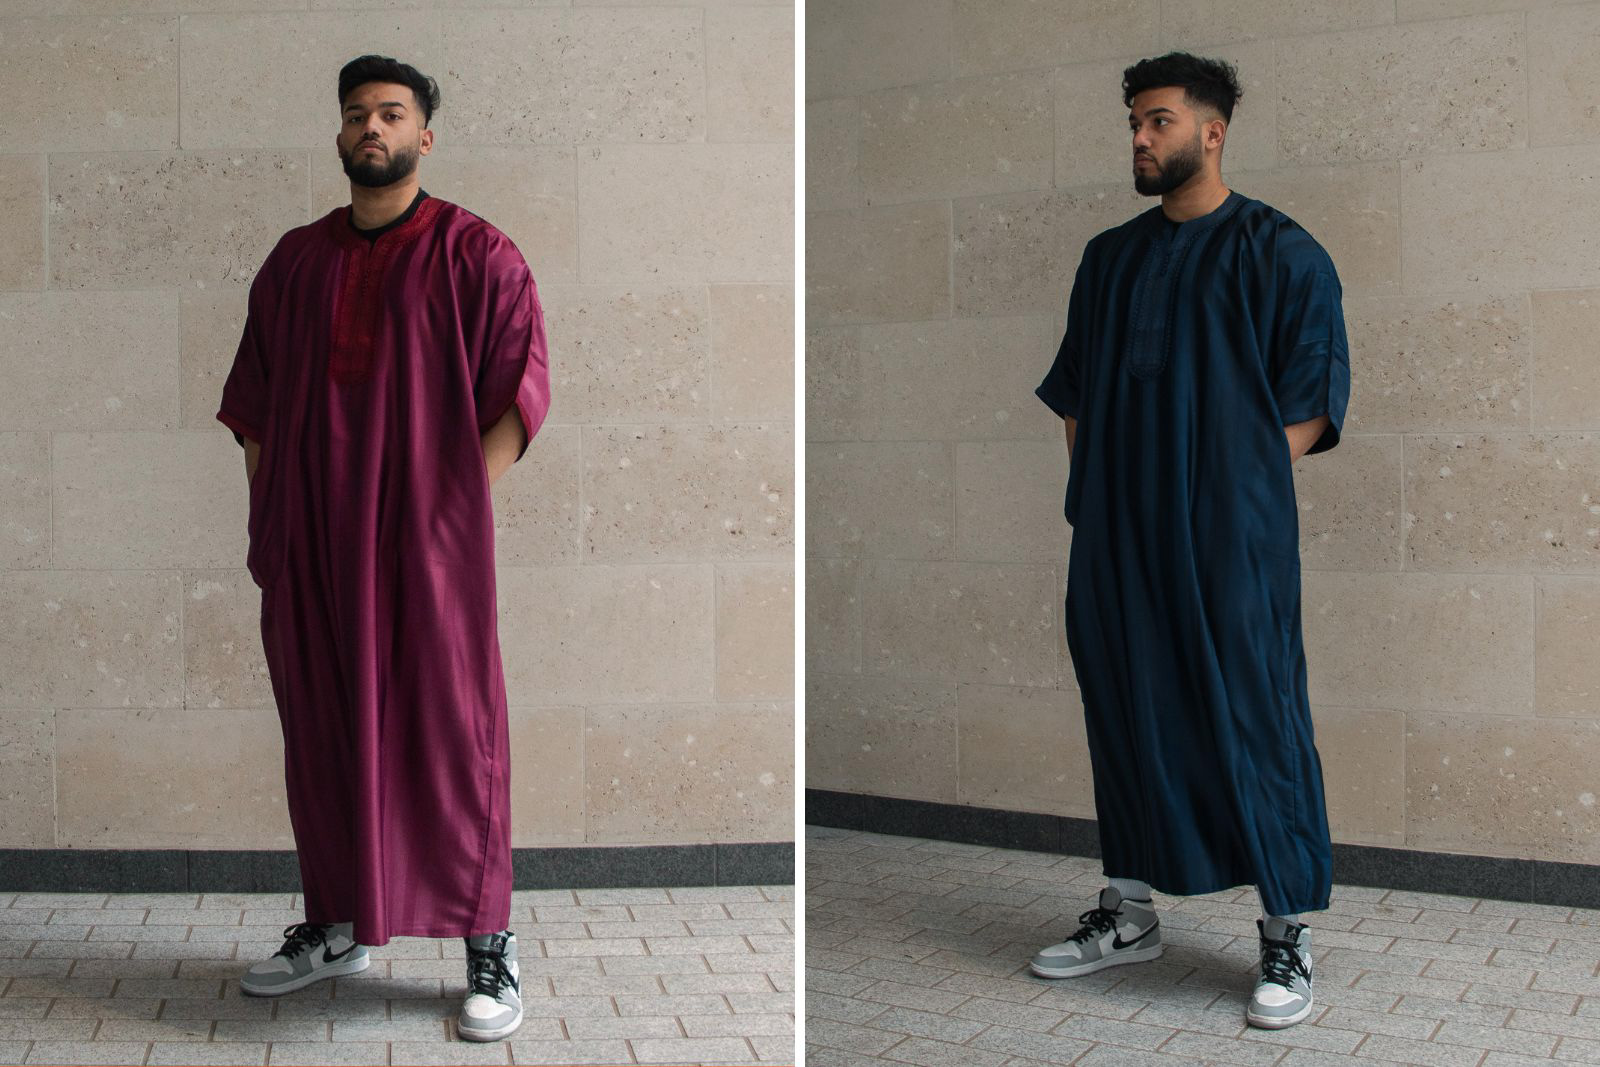 Eid men's fashion photographs courtesy of Al-Rayyan